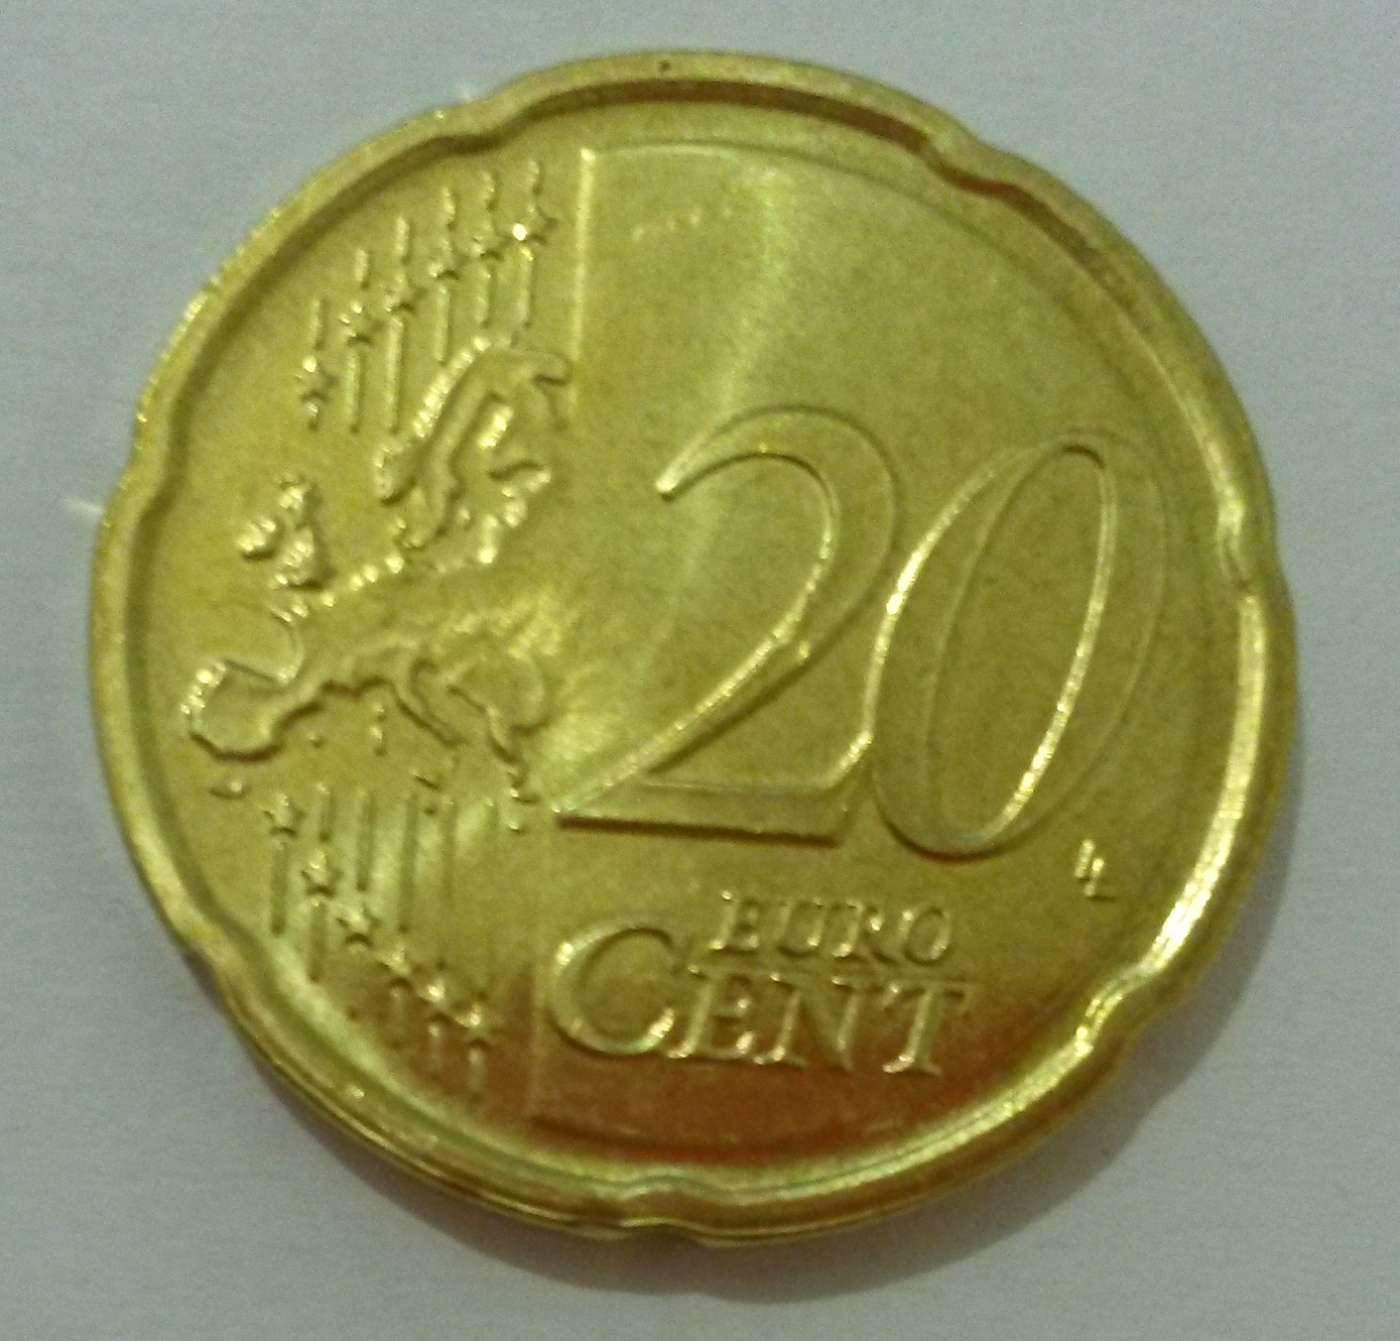 20 euro cent vs dollars